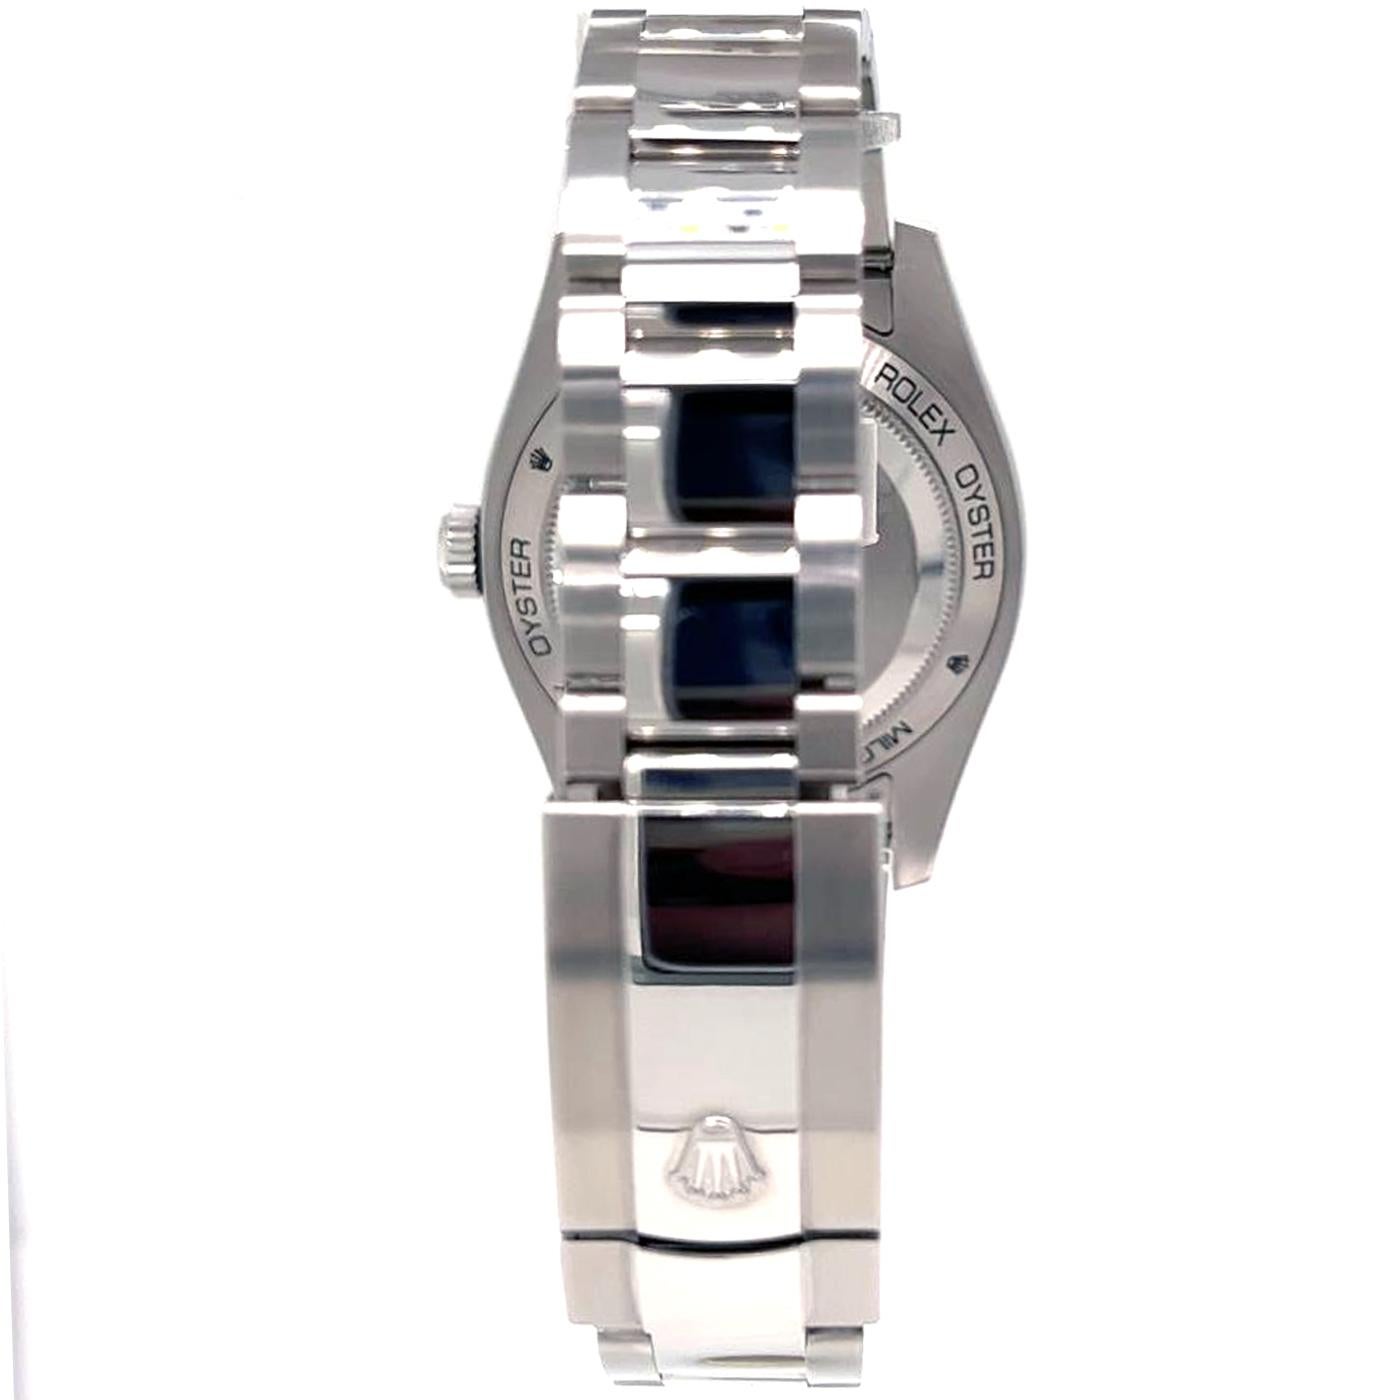 Rolex Milgauss Black Dial Green Crystal Stainless Steel Watch 116400GV 1